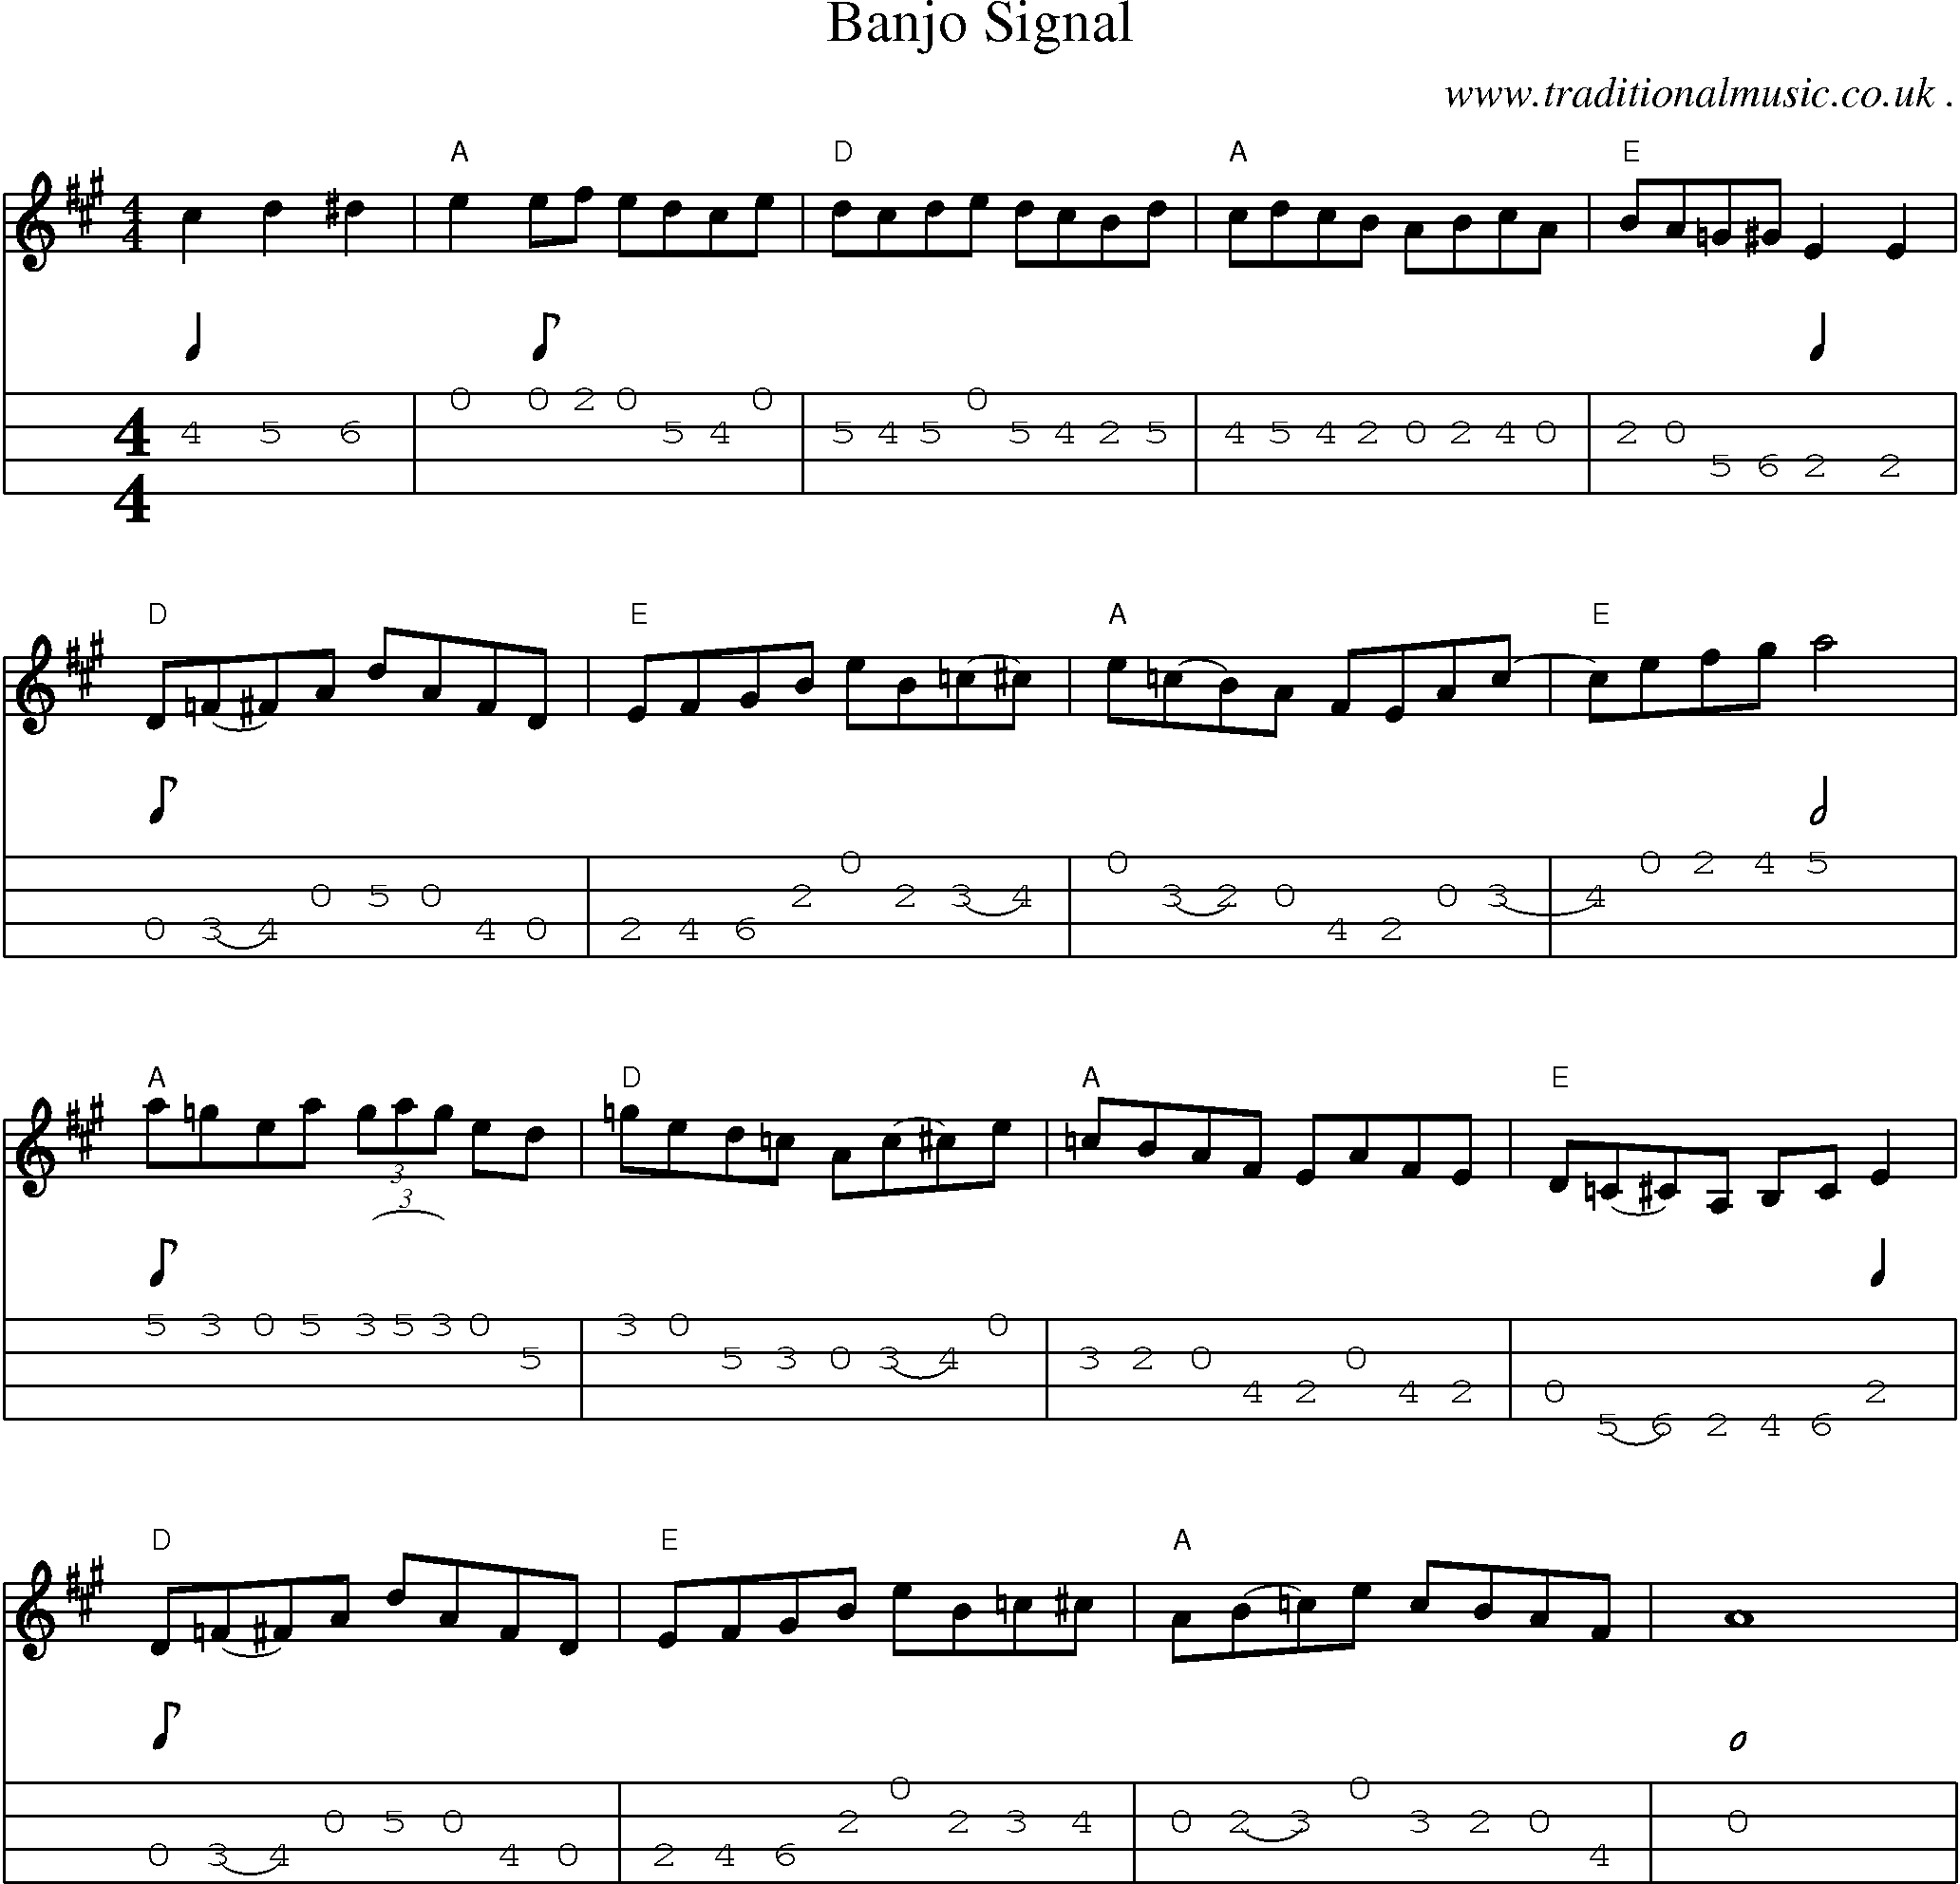 Music Score and Mandolin Tabs for Banjo Signal